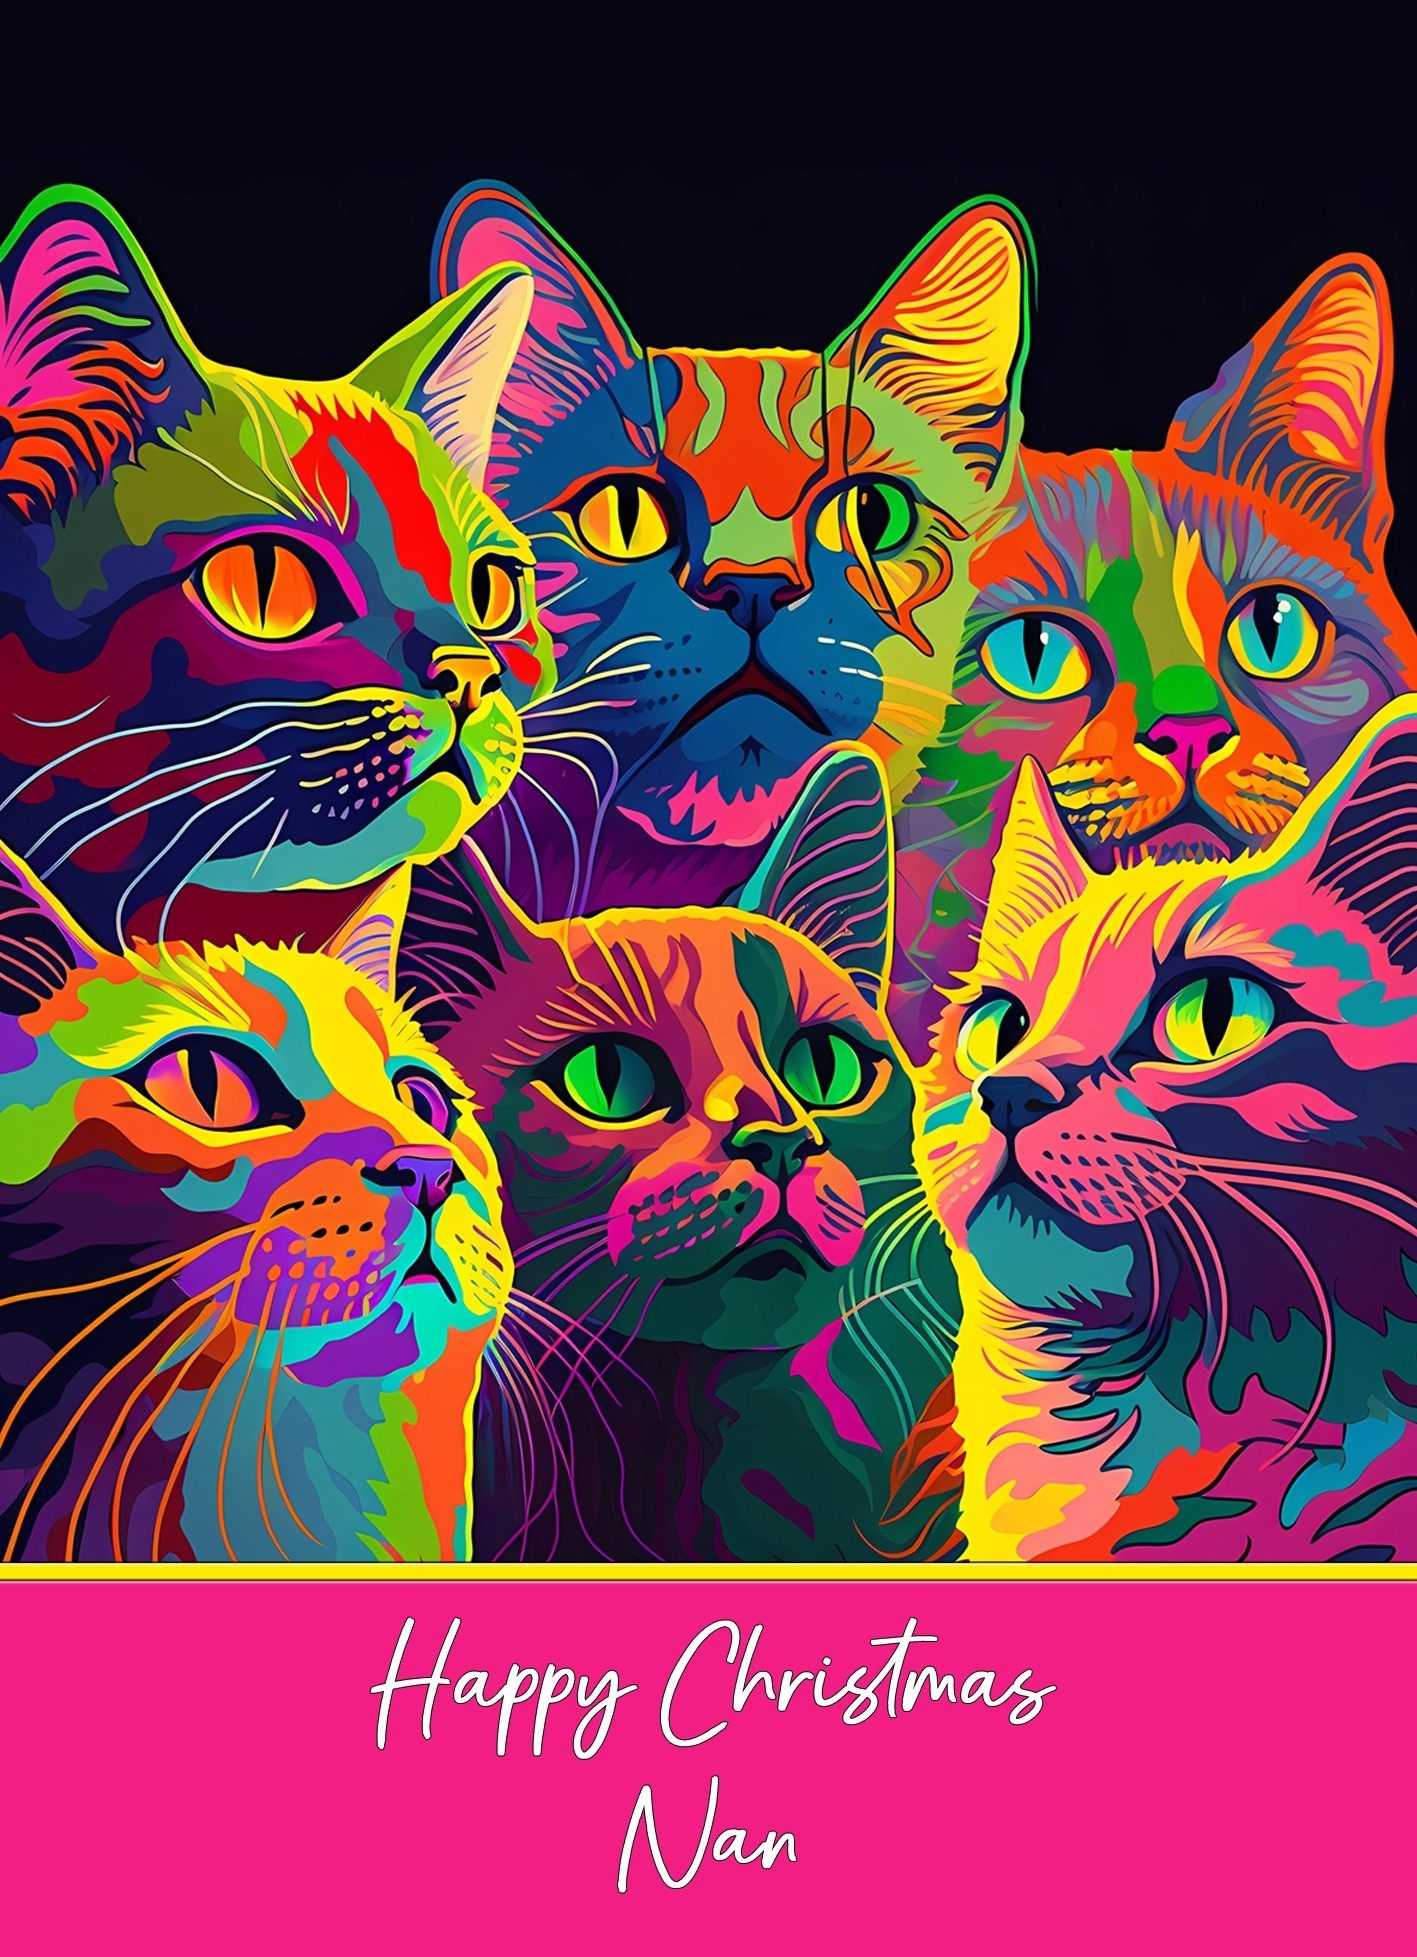 Christmas Card For Nan (Colourful Cat Art)